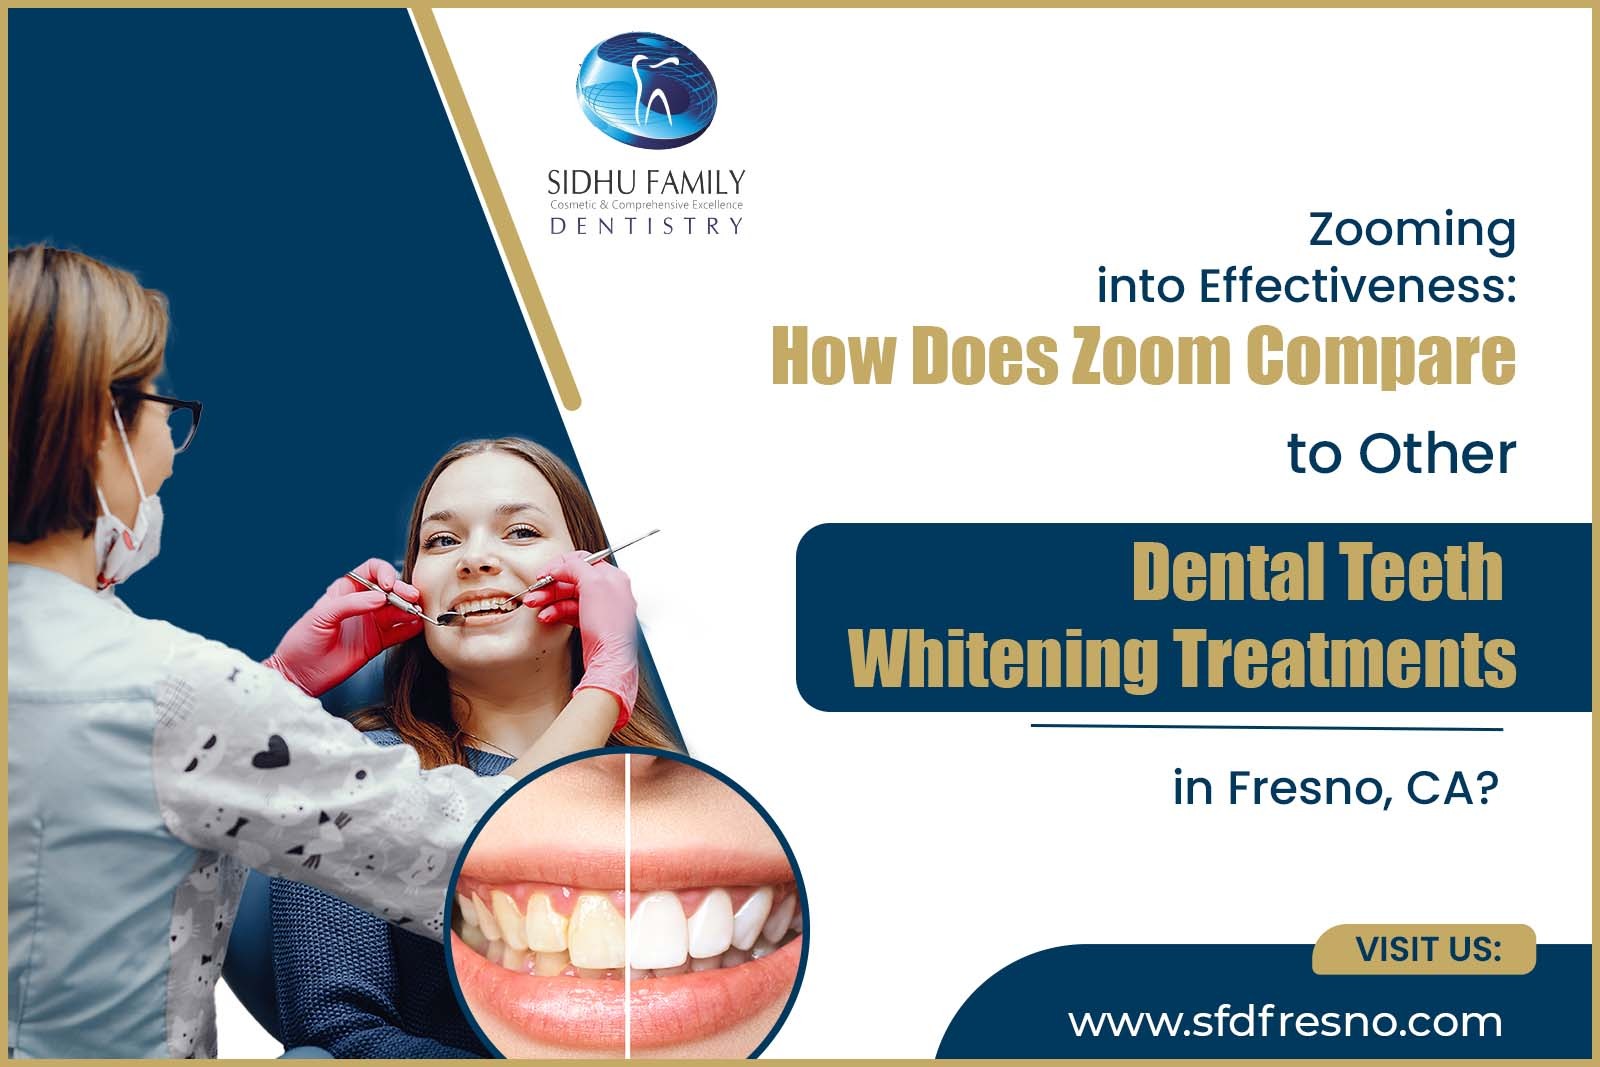 Dental Teeth Whitening Treatments in Fresno, CA